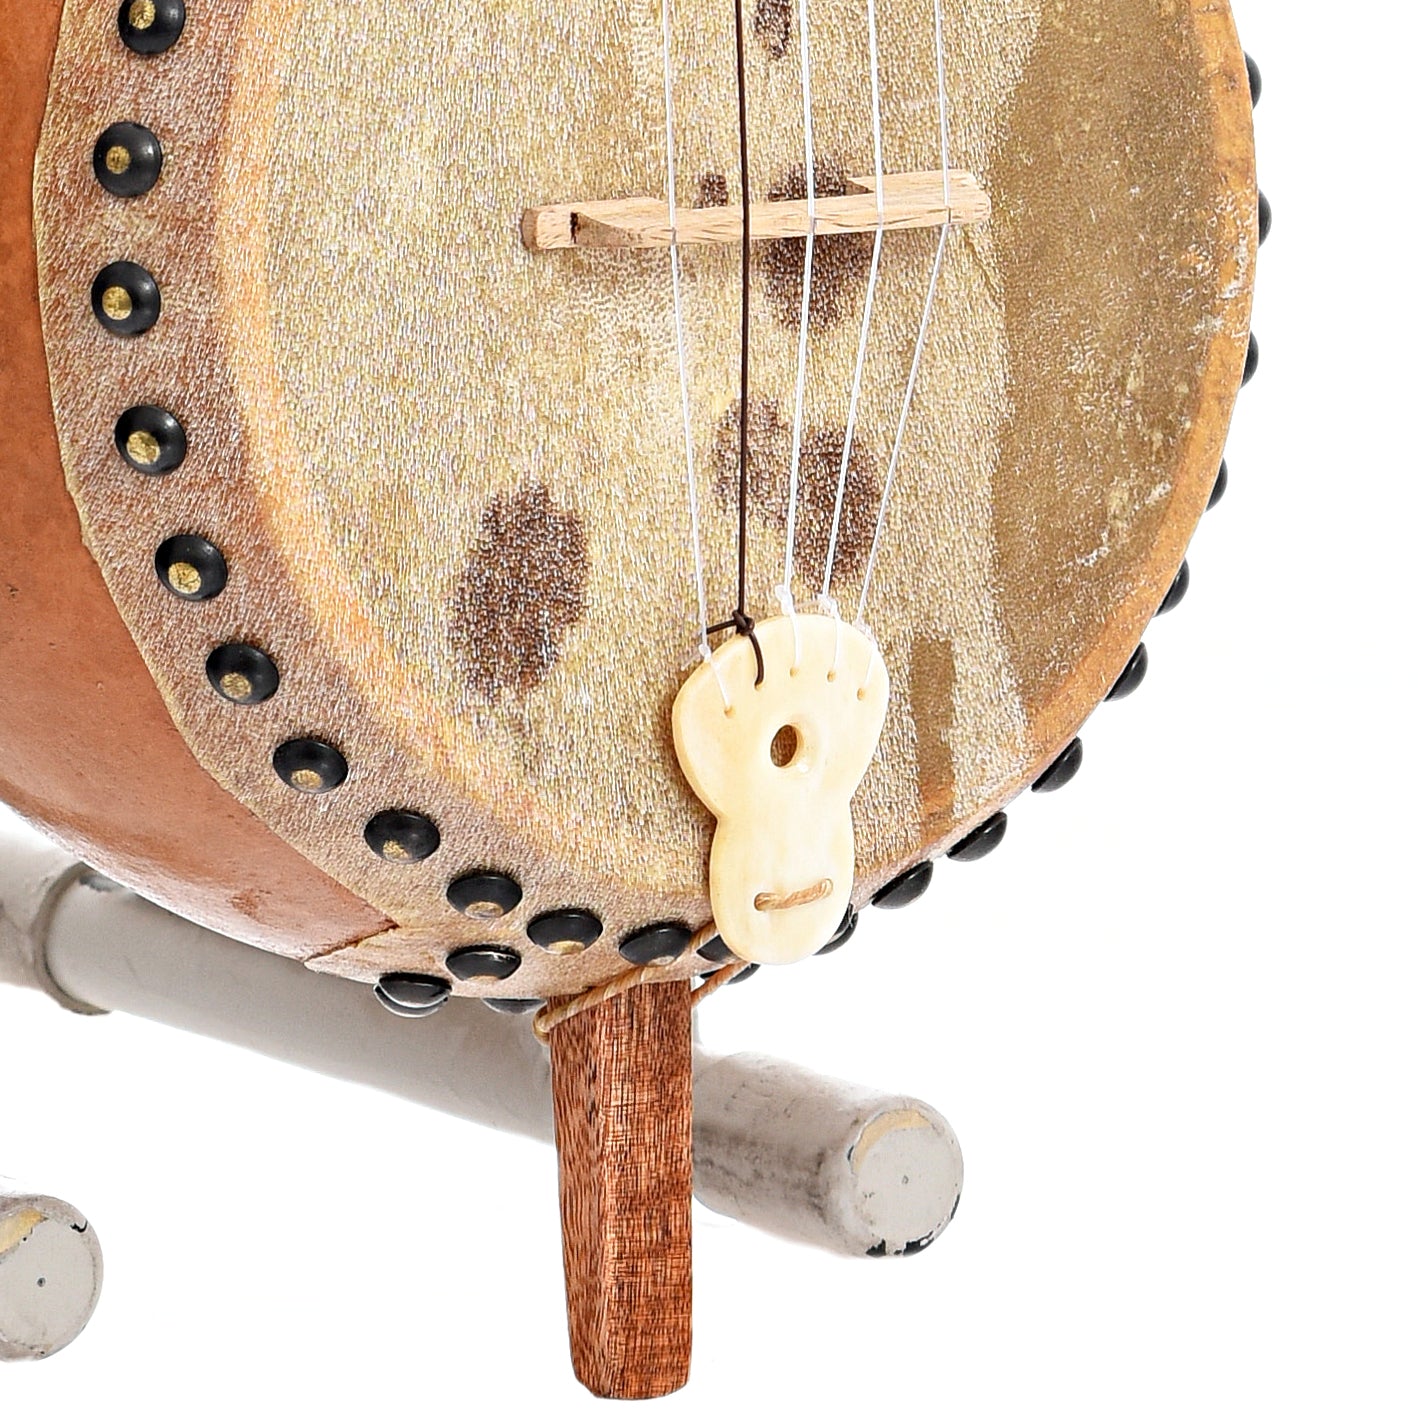 Tailpiece and bridge of Menzies Fretless Gourd Banjo #578